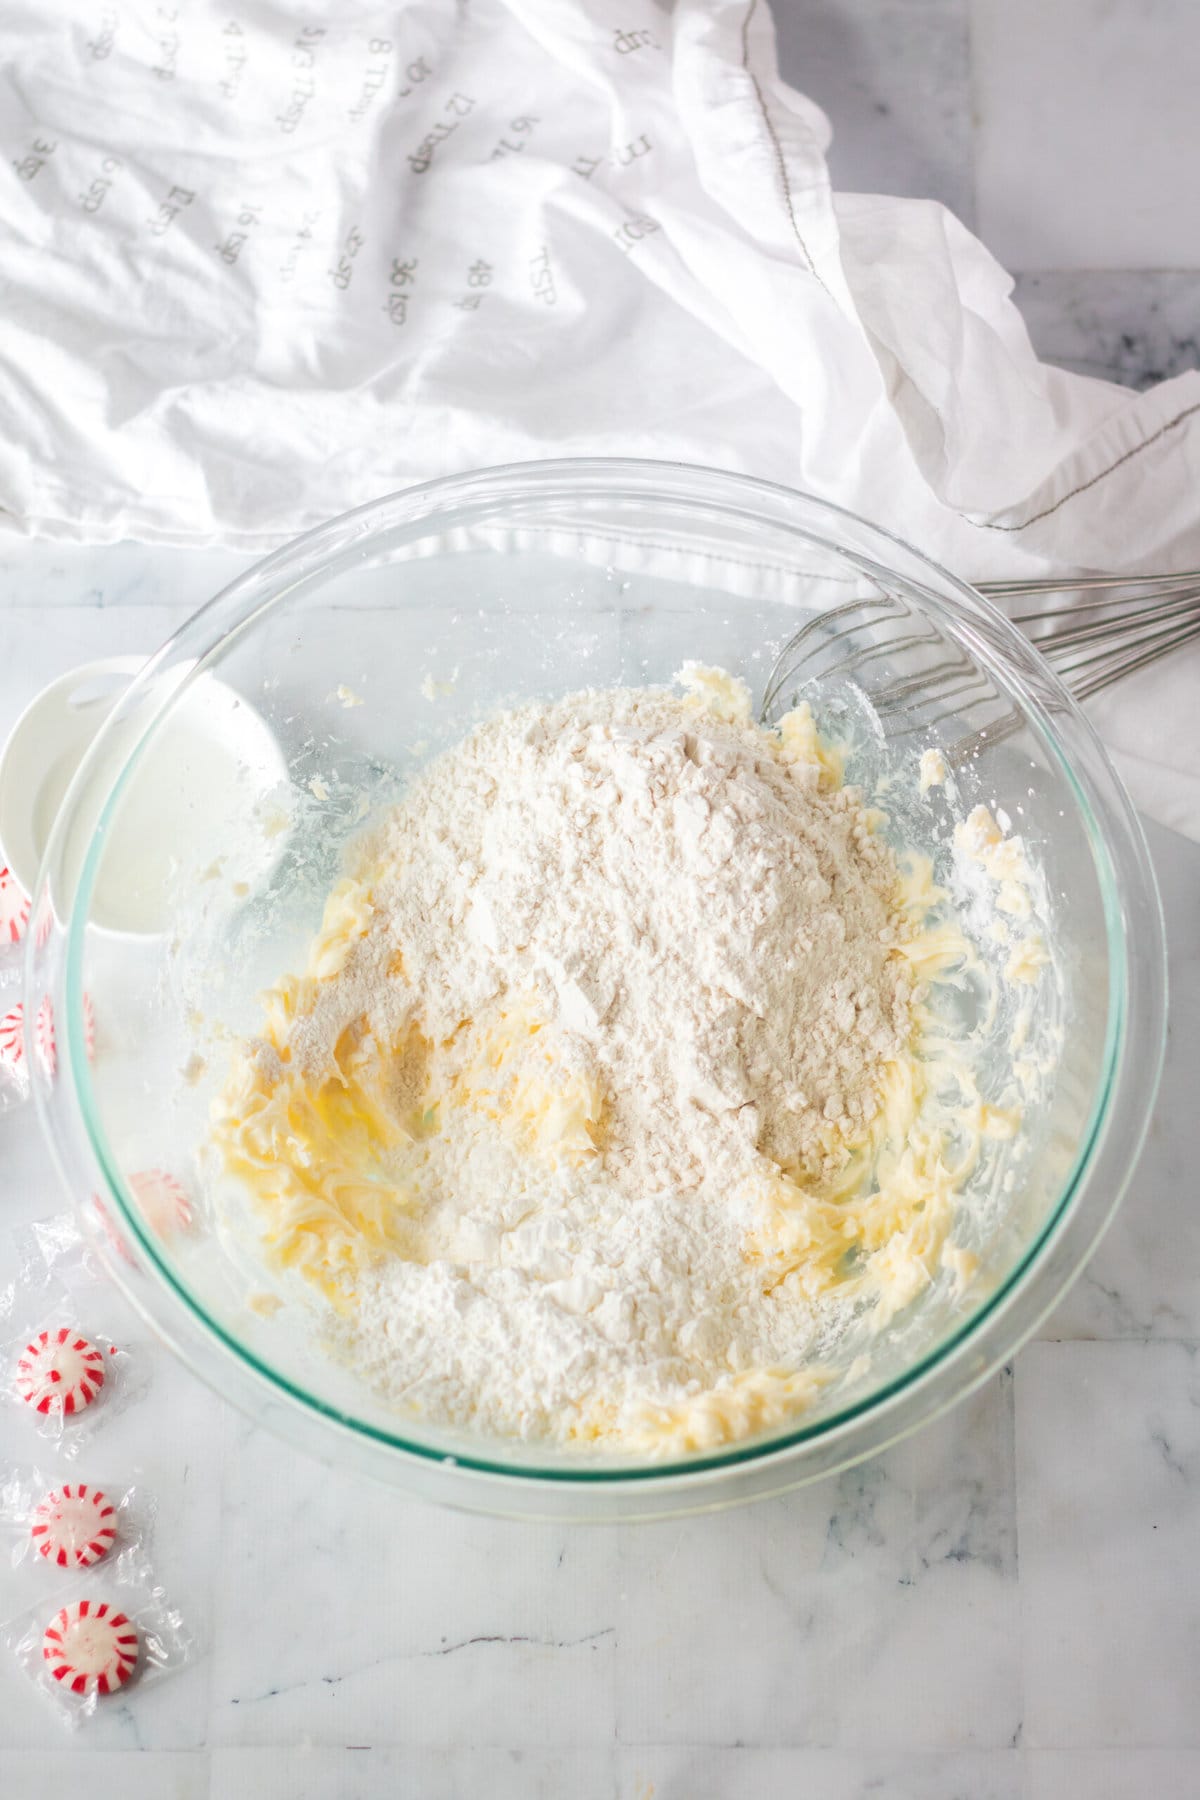 Adding the flour to the mixture.